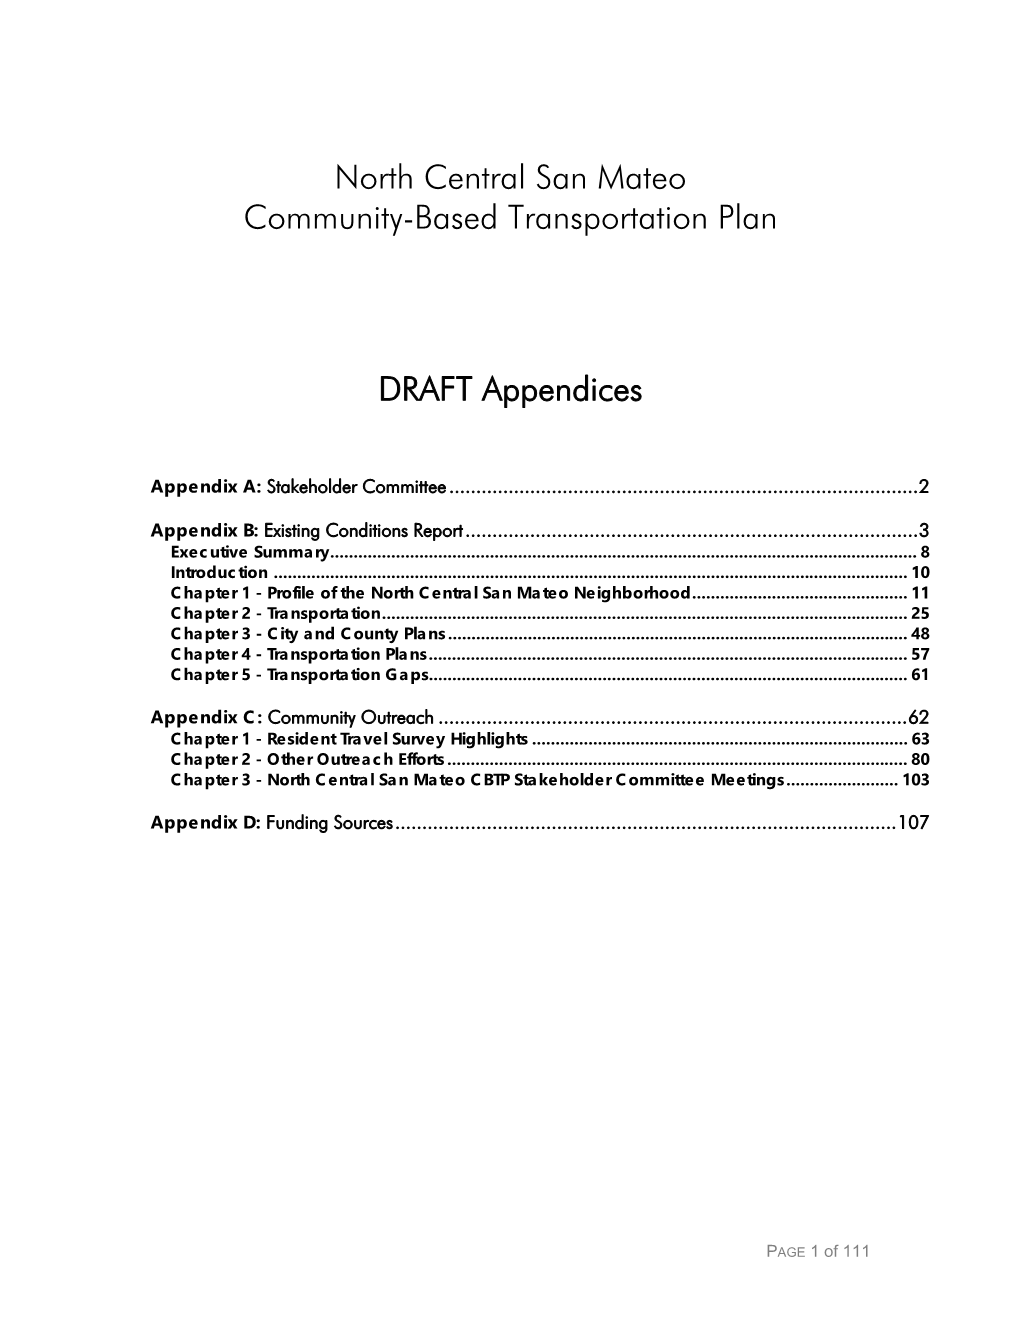 North Central San Mateo Community-Based Transportation Plan